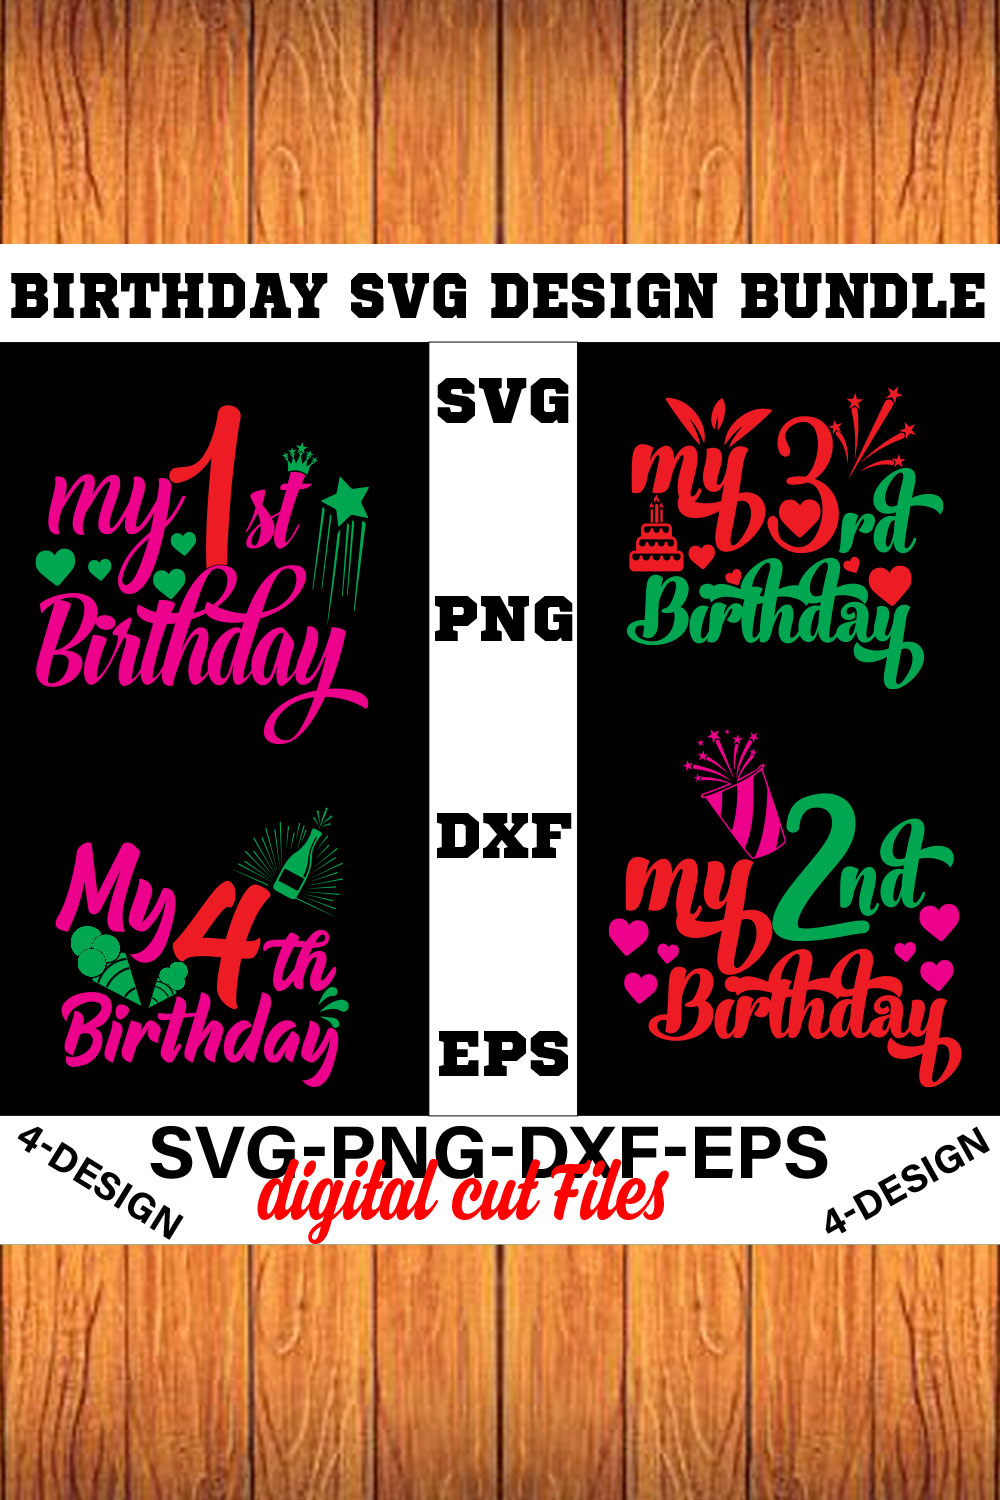 birthday svg design bundle Happy birthday svg bundle hand lettered birthday svg birthday party svg Volume-01 pinterest preview image.